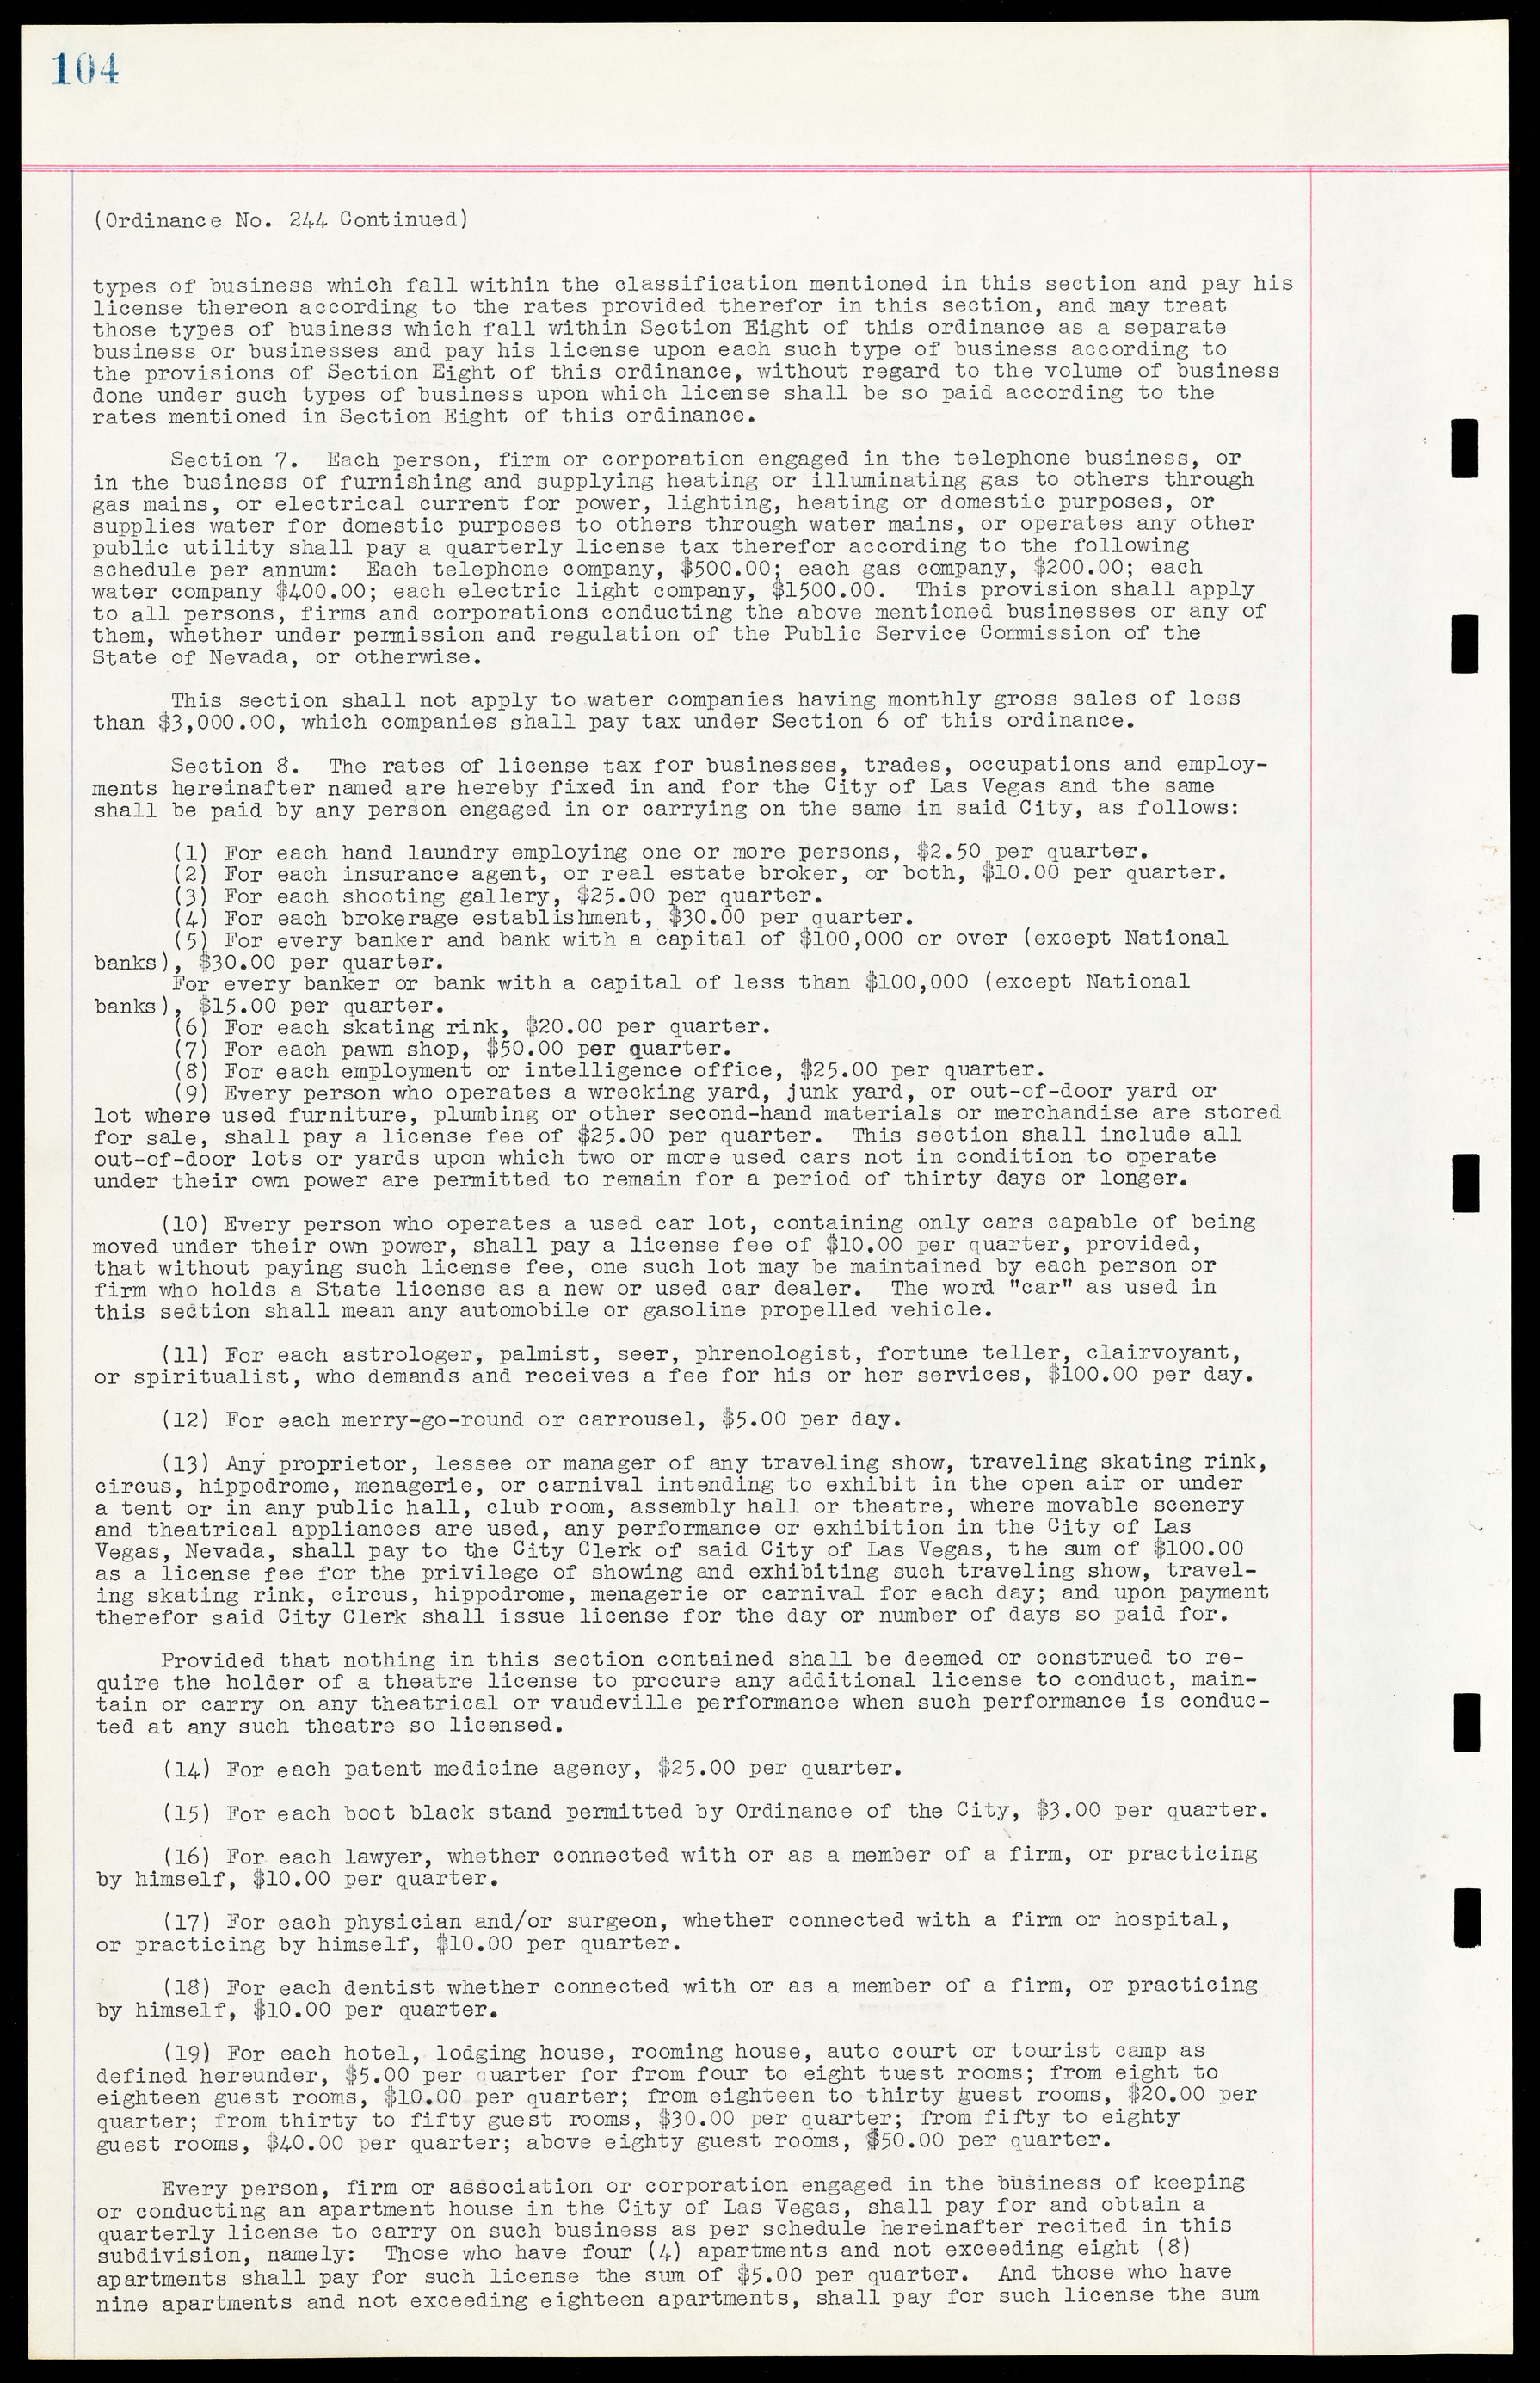 Las Vegas City Ordinances, March 31, 1933 to October 25, 1950, lvc000014-124